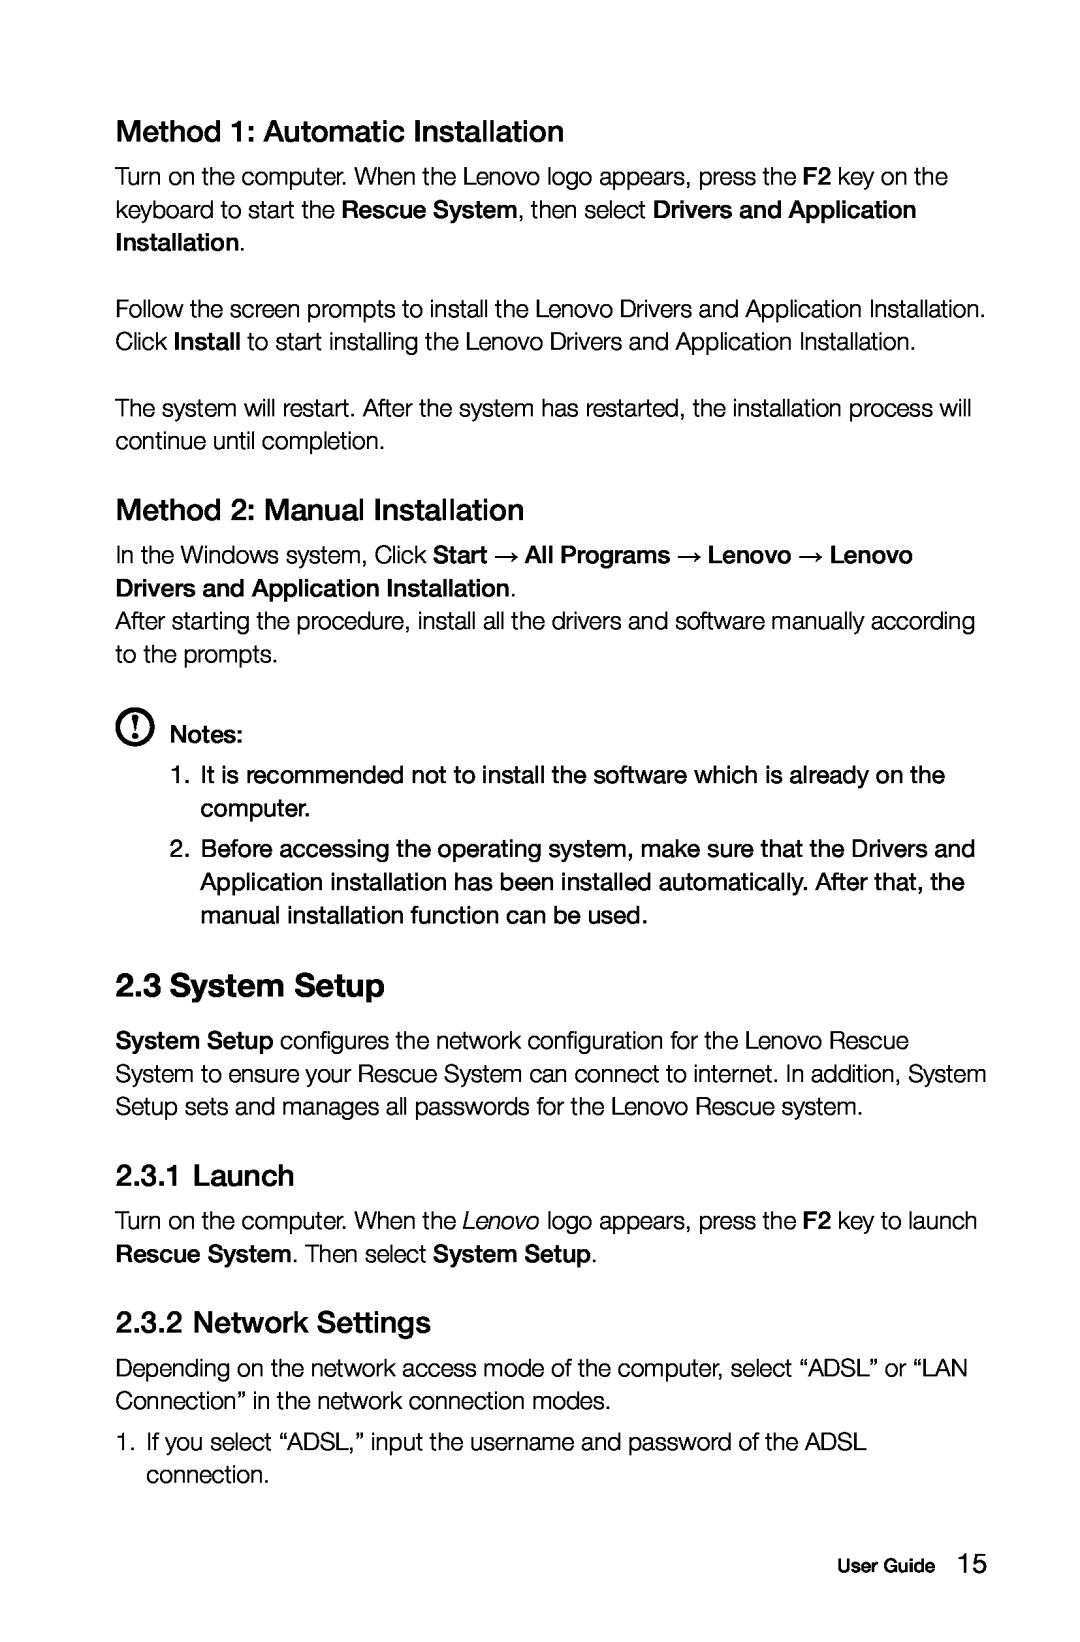 Lenovo 10041-10049 System Setup, Method 1 Automatic Installation, Method 2 Manual Installation, Launch, Network Settings 